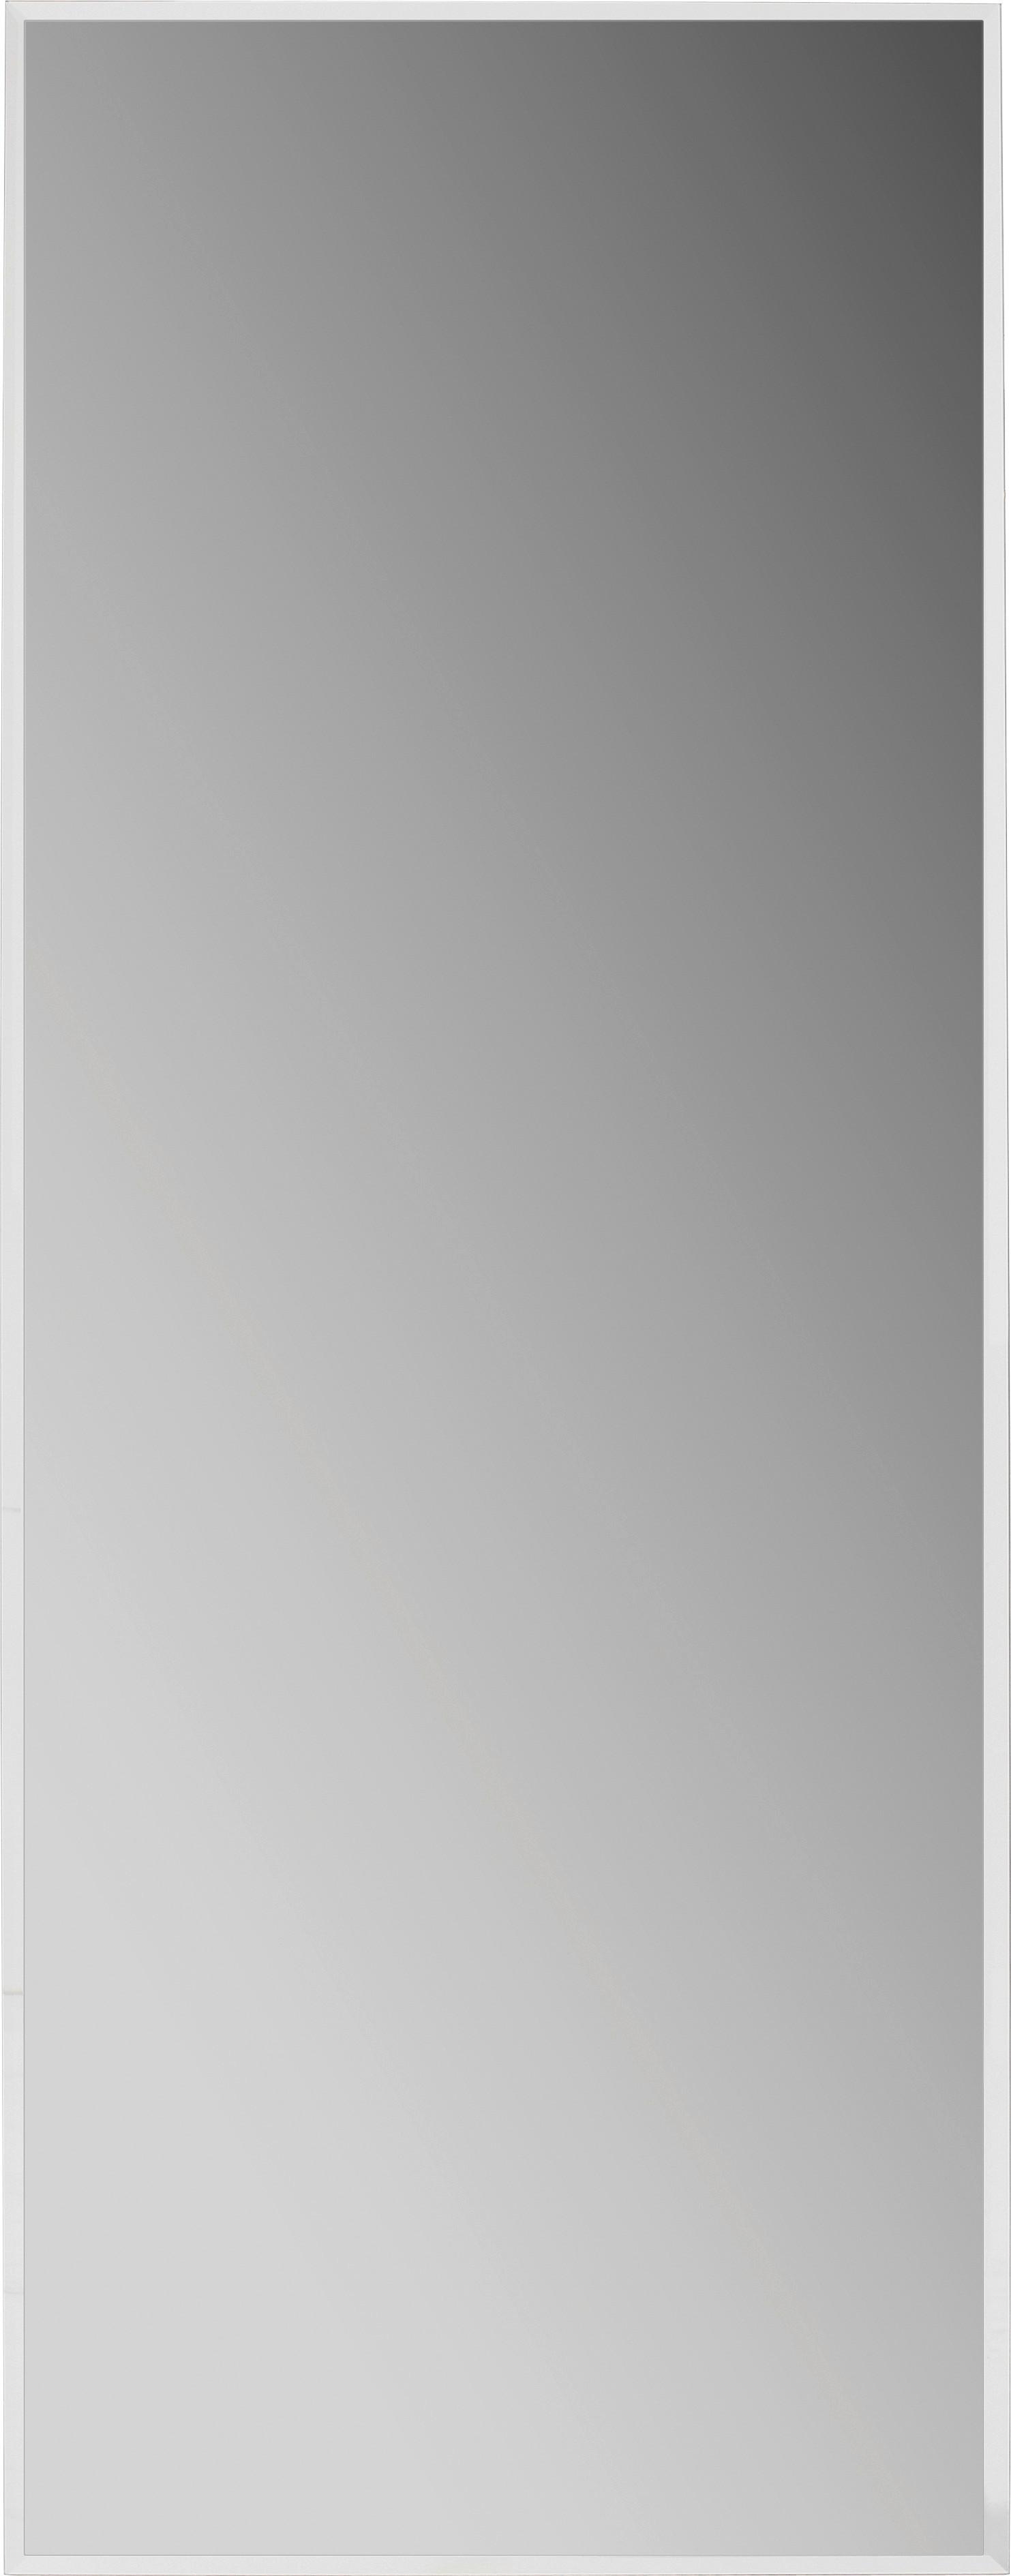 Wandspiegel Crystal Eckig 120x45 cm Facettenschliff - MODERN, Glas (120/45cm) - Ondega